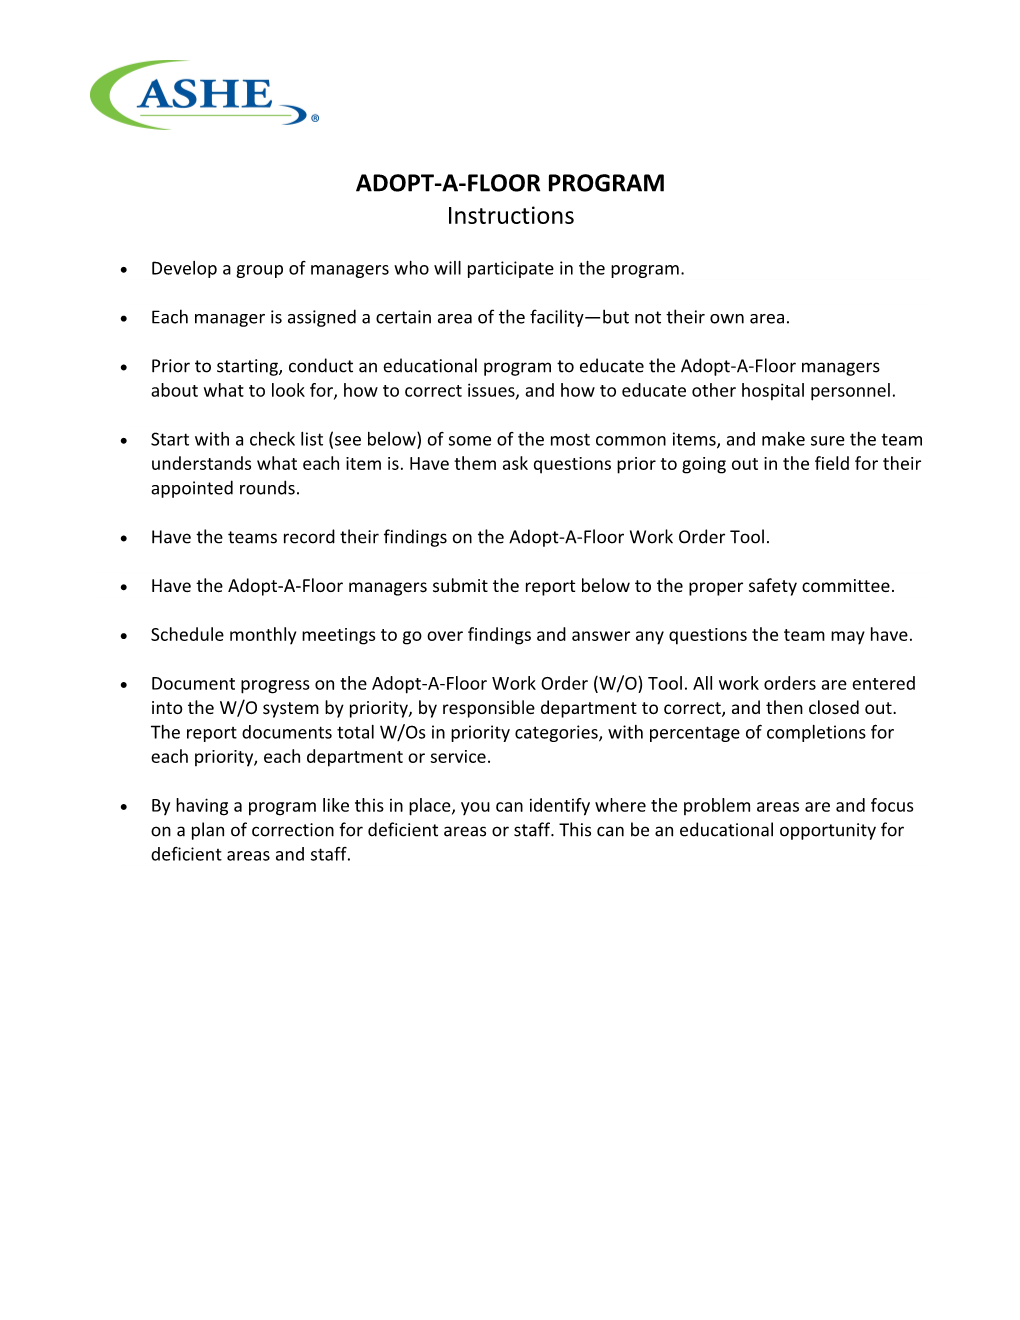 Adopt-A-Floor Program